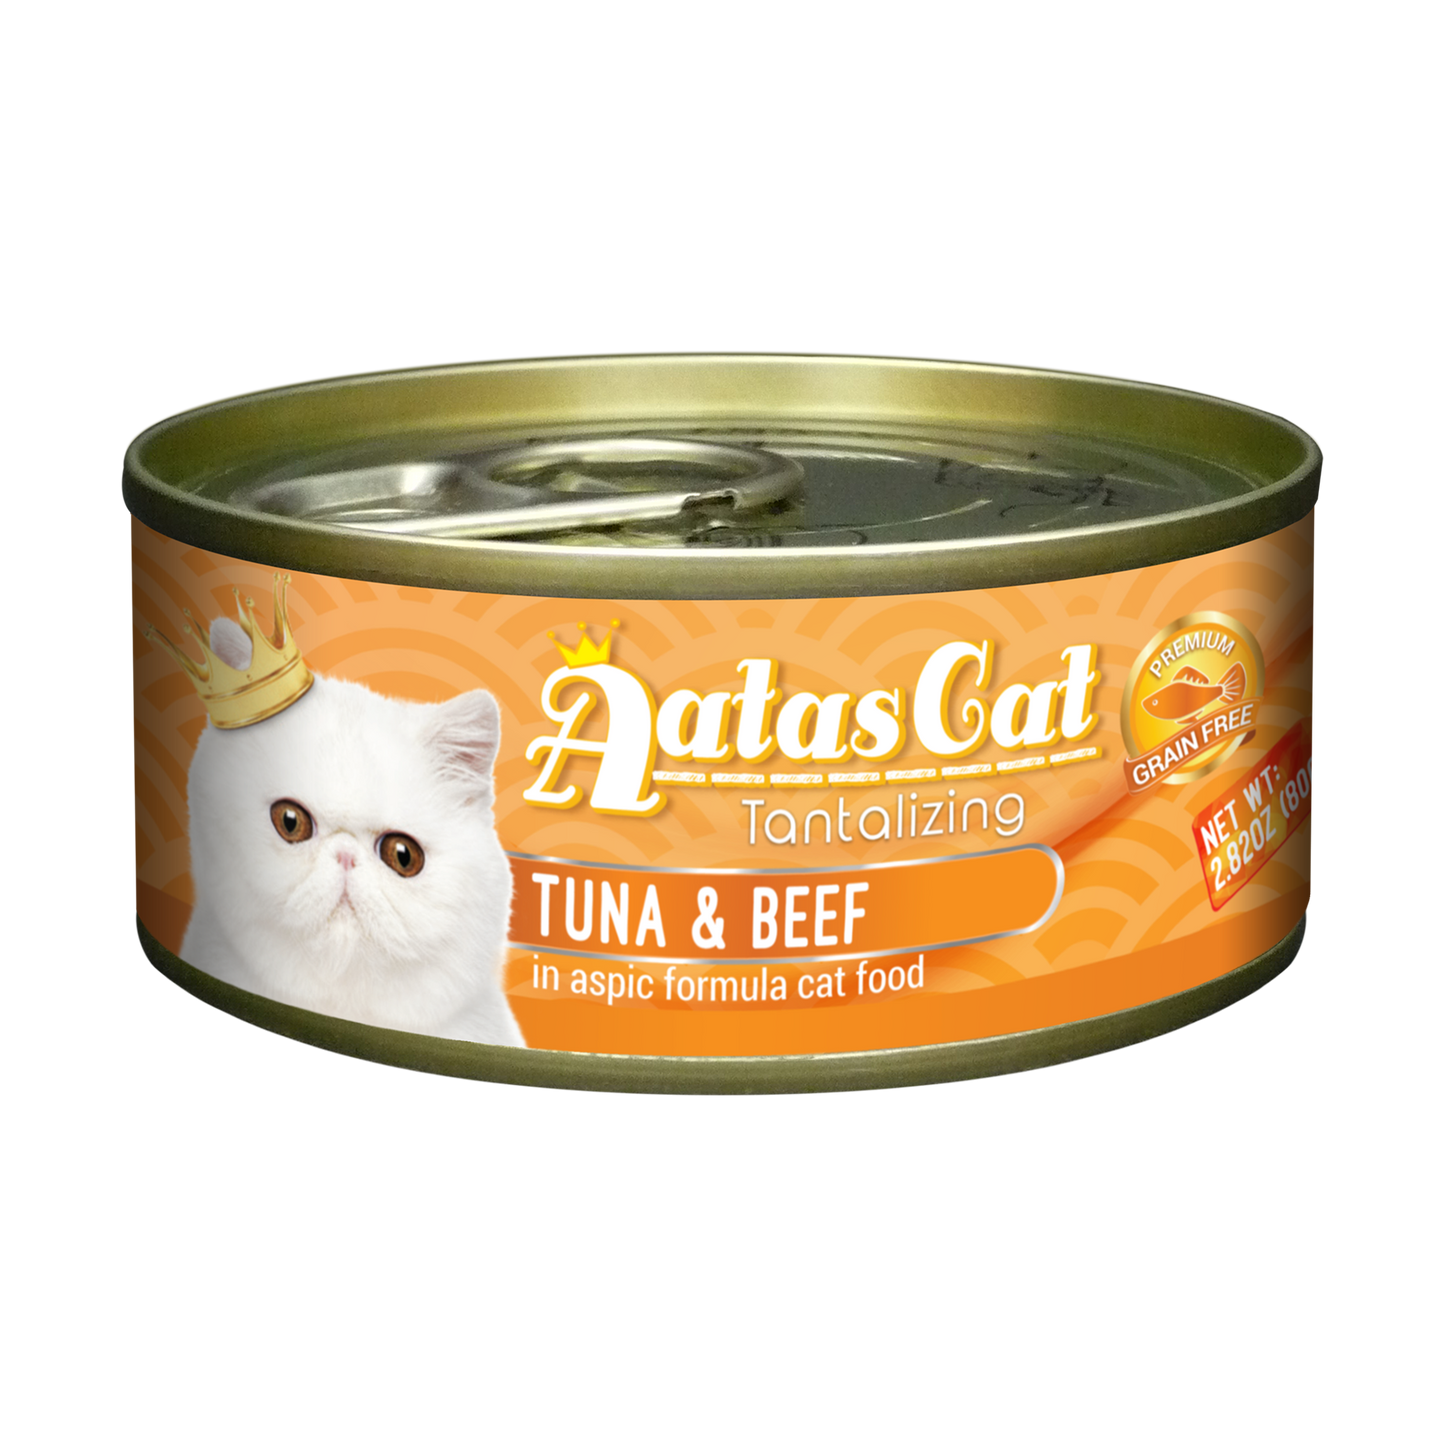 Aatas Cat Tantalizing Tuna & Beef Cat Canned Food 80g